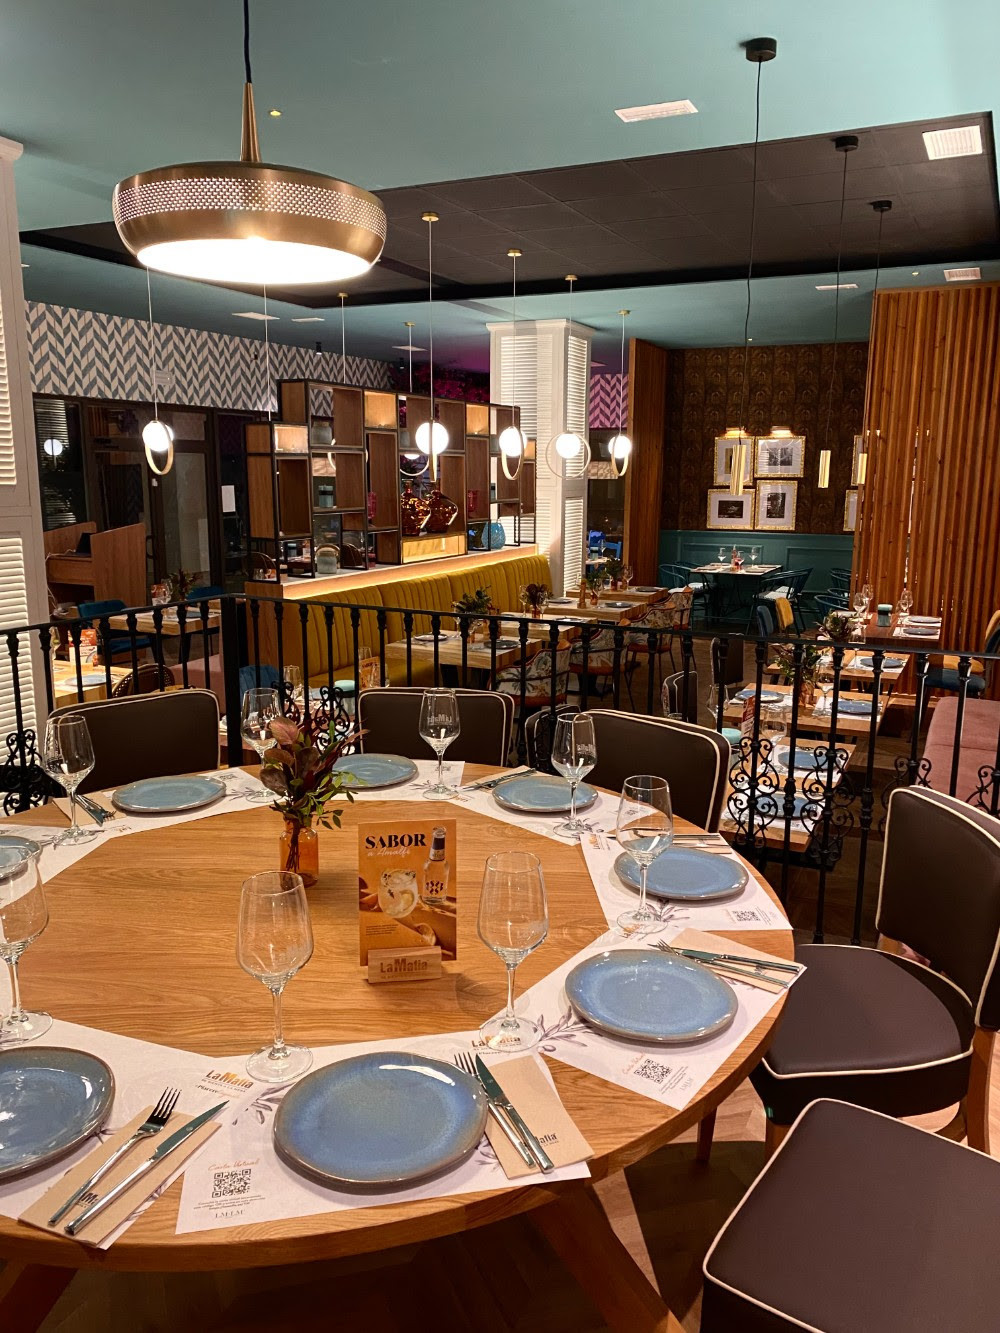 La Mafia se sienta a la mesa inaugura un nuevo restaurante en Antequera